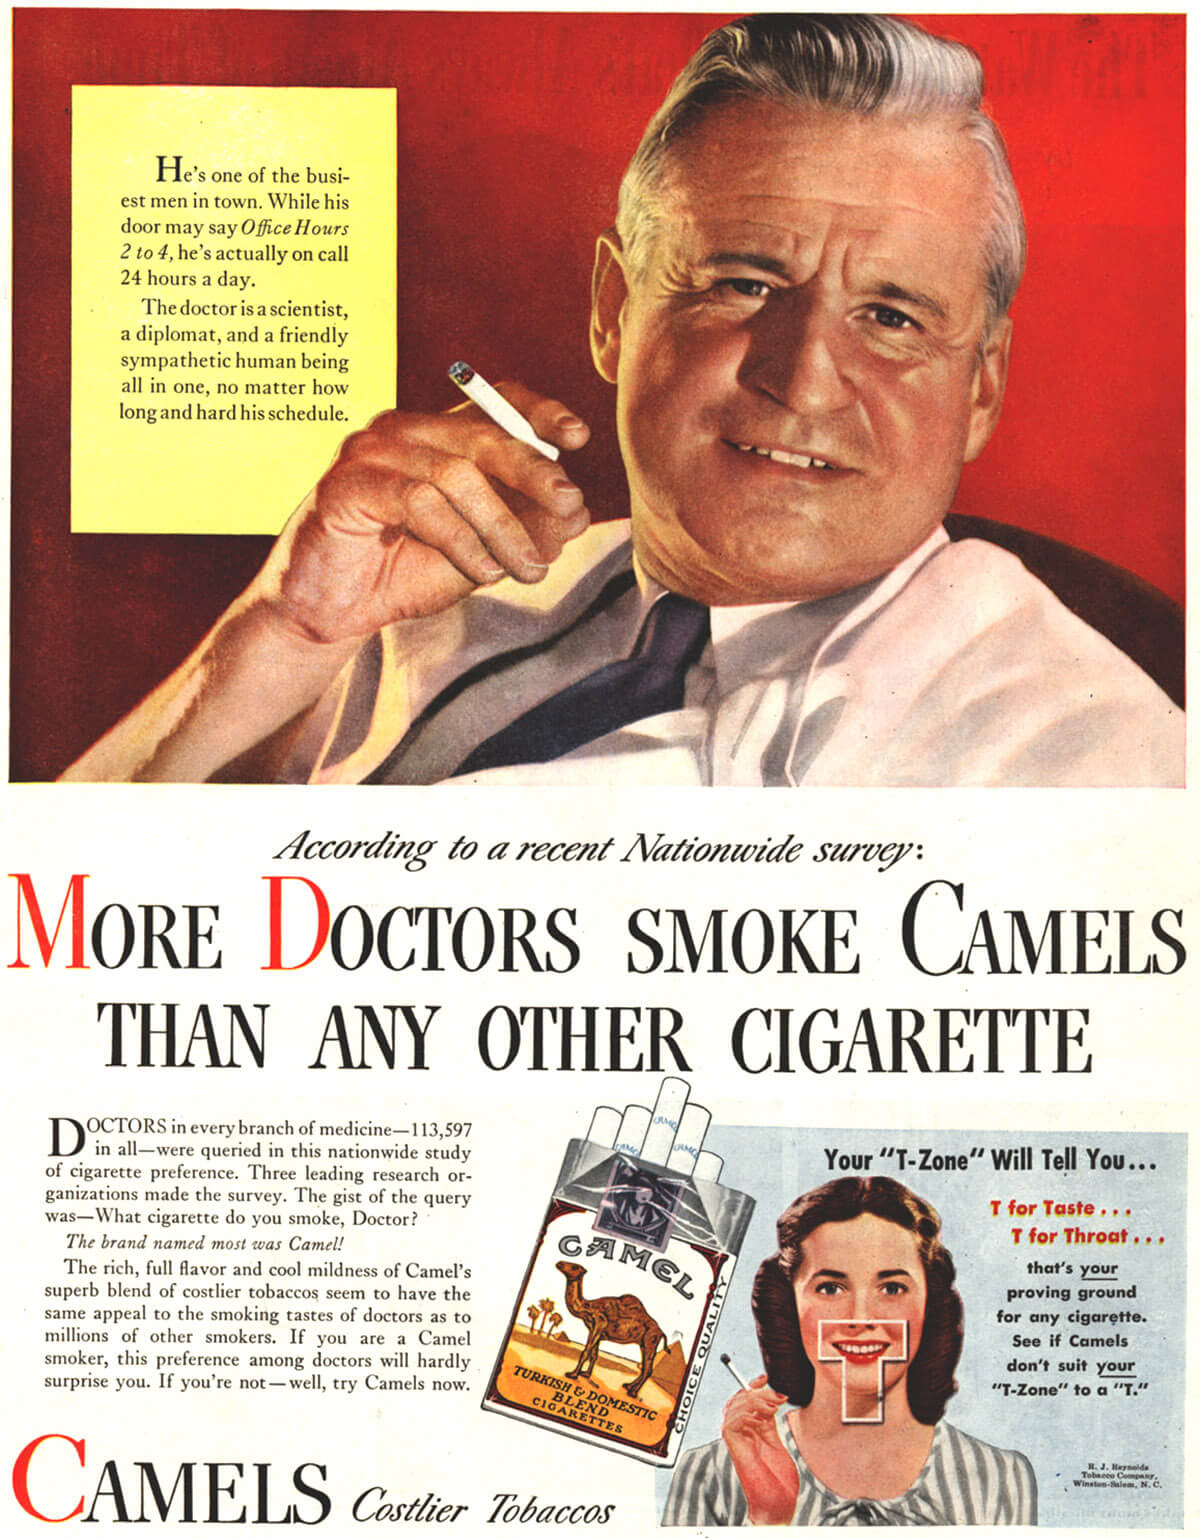 Camel Cigarettes ad featuring doctors